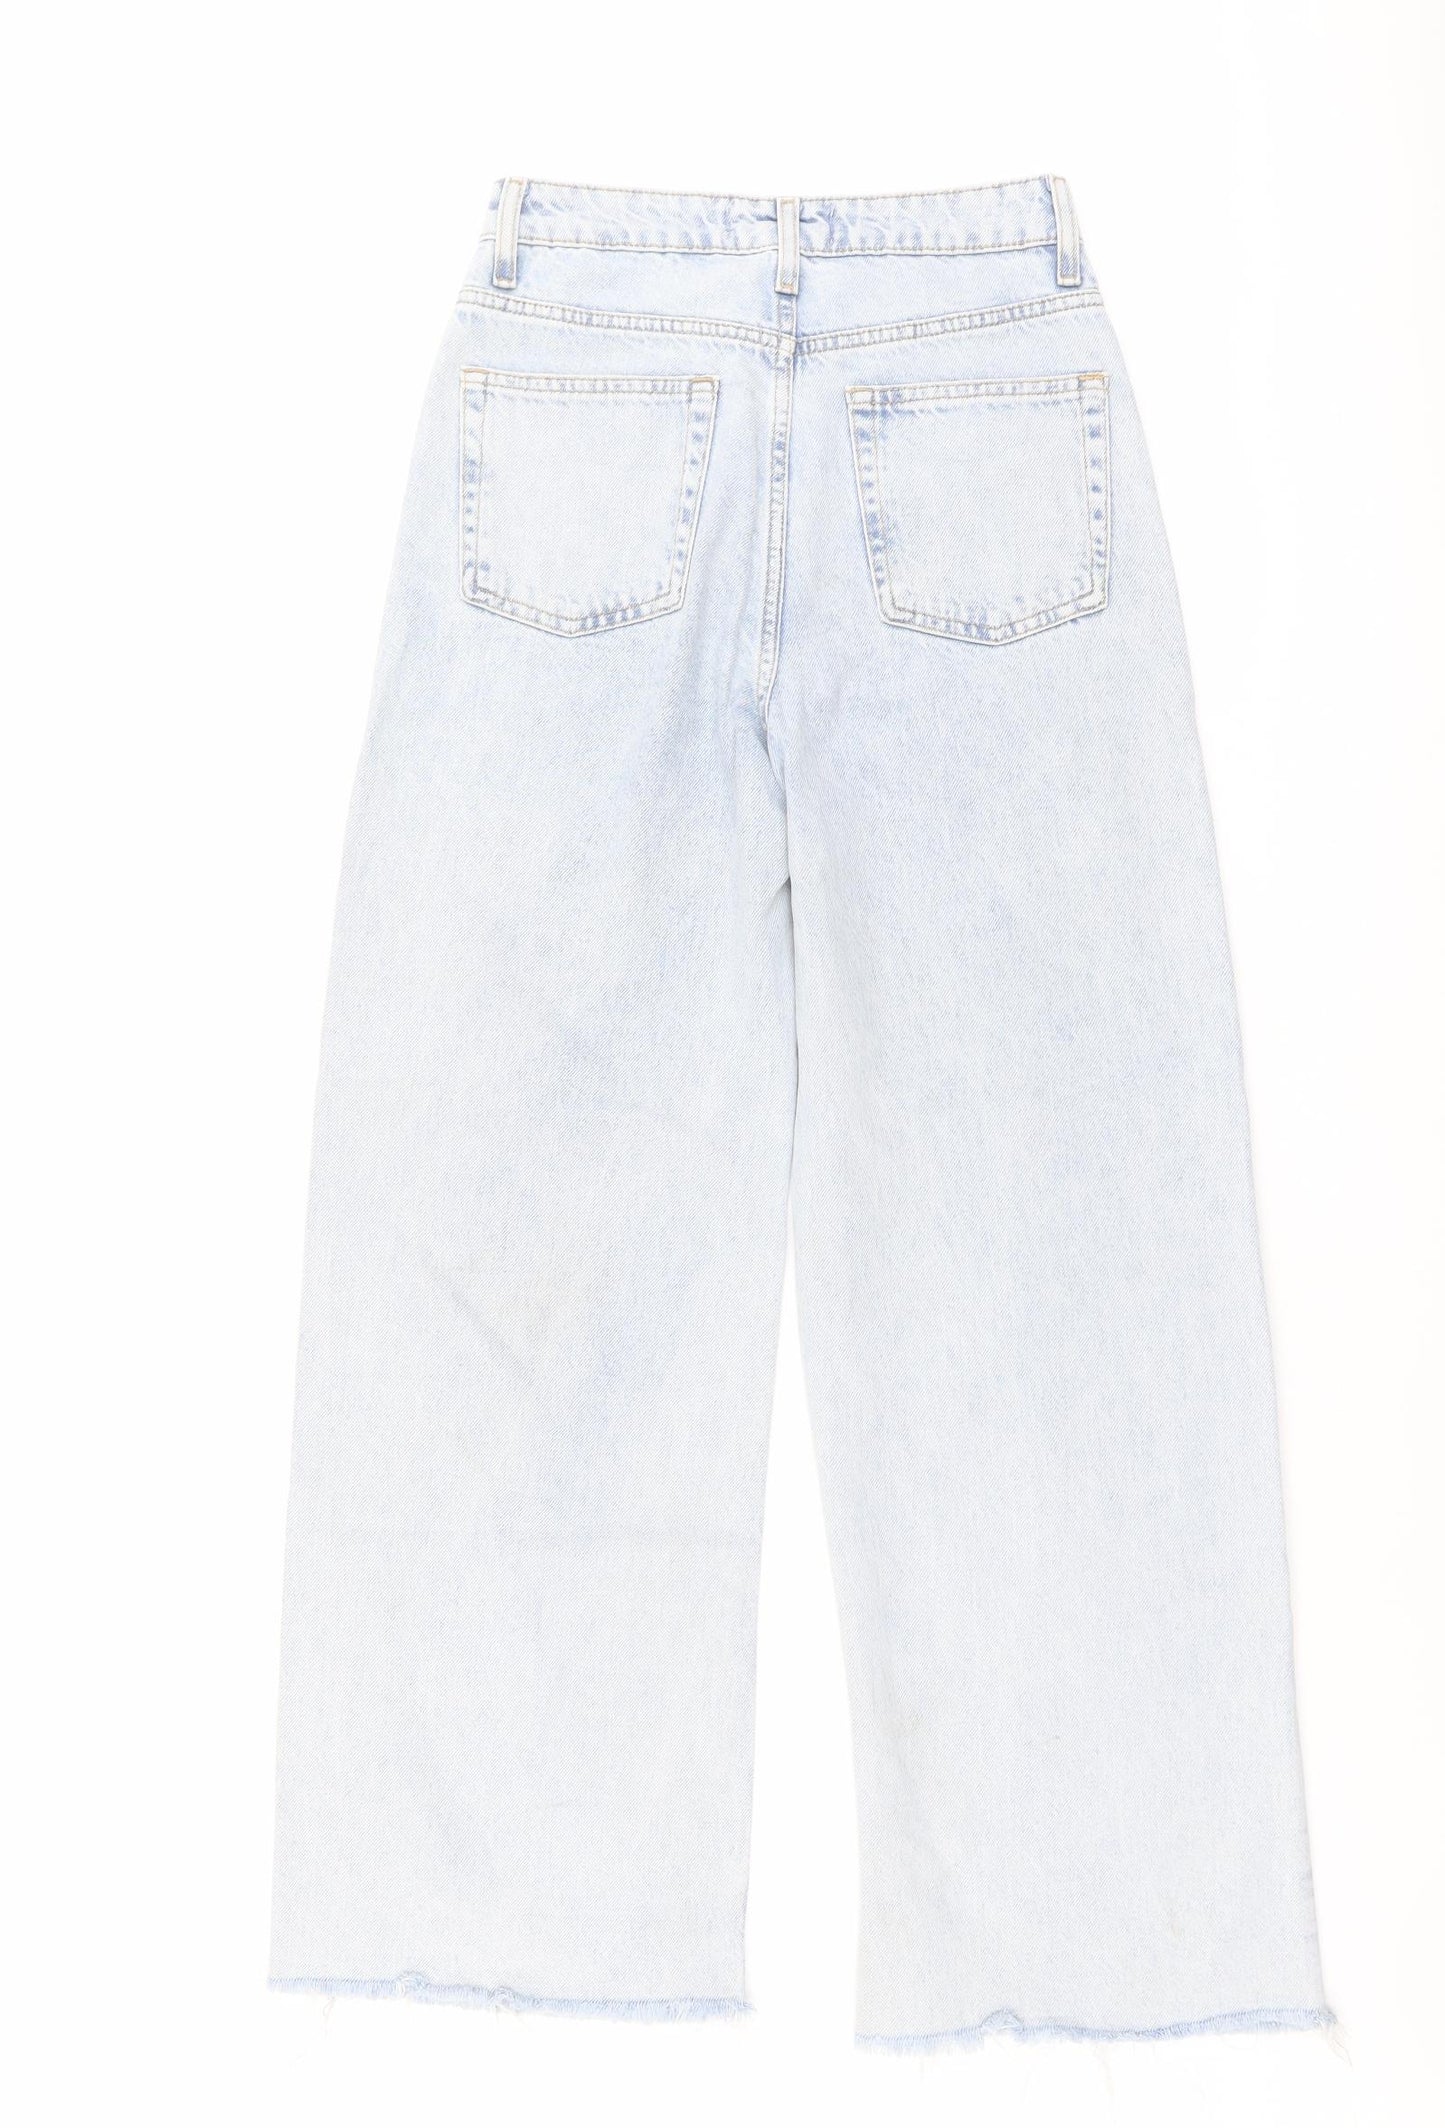 Denim & Co. Womens Blue Cotton Wide-Leg Jeans Size 4 L28 in Regular Button